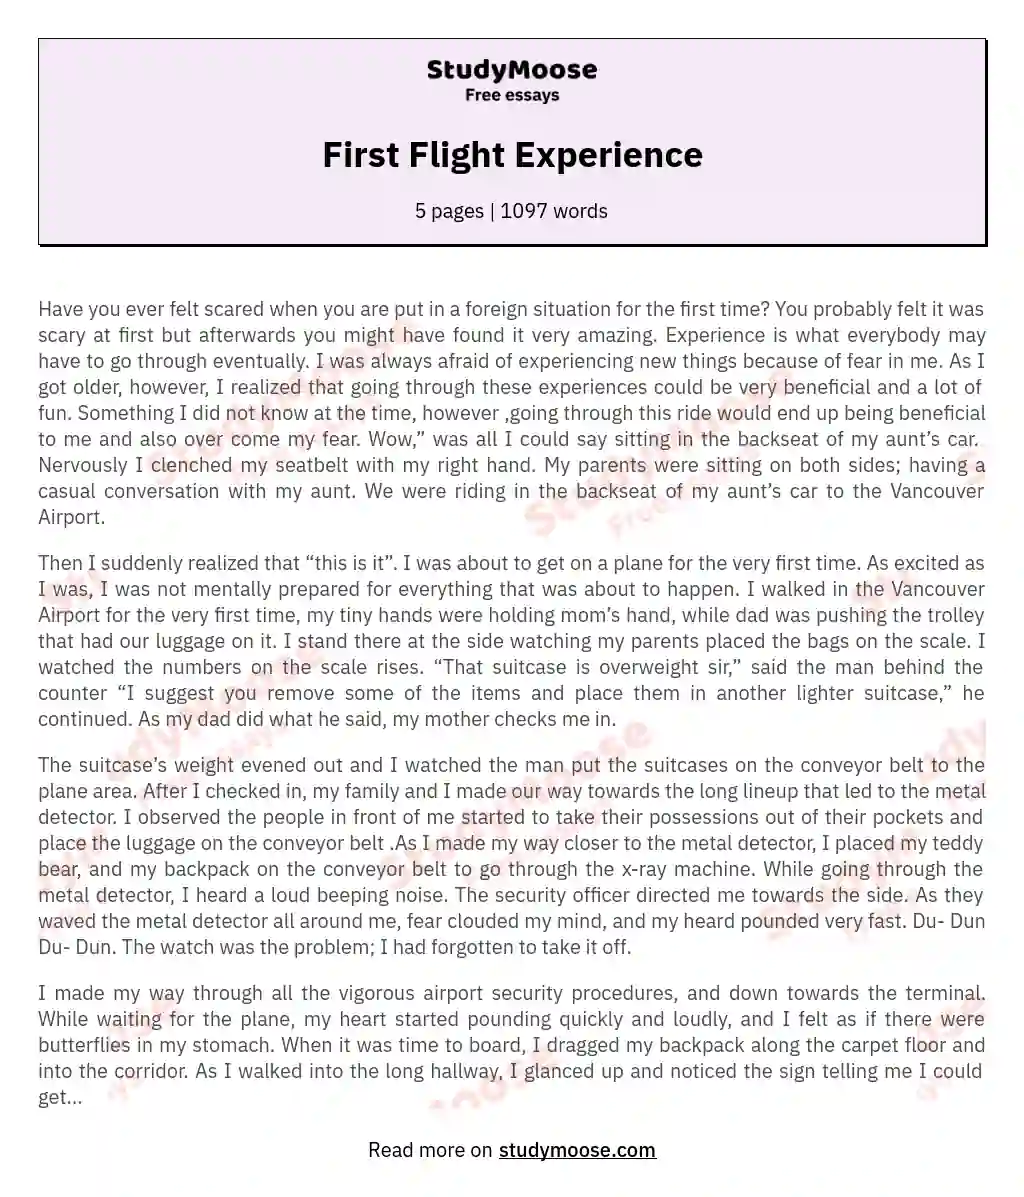 First Flight Experience essay